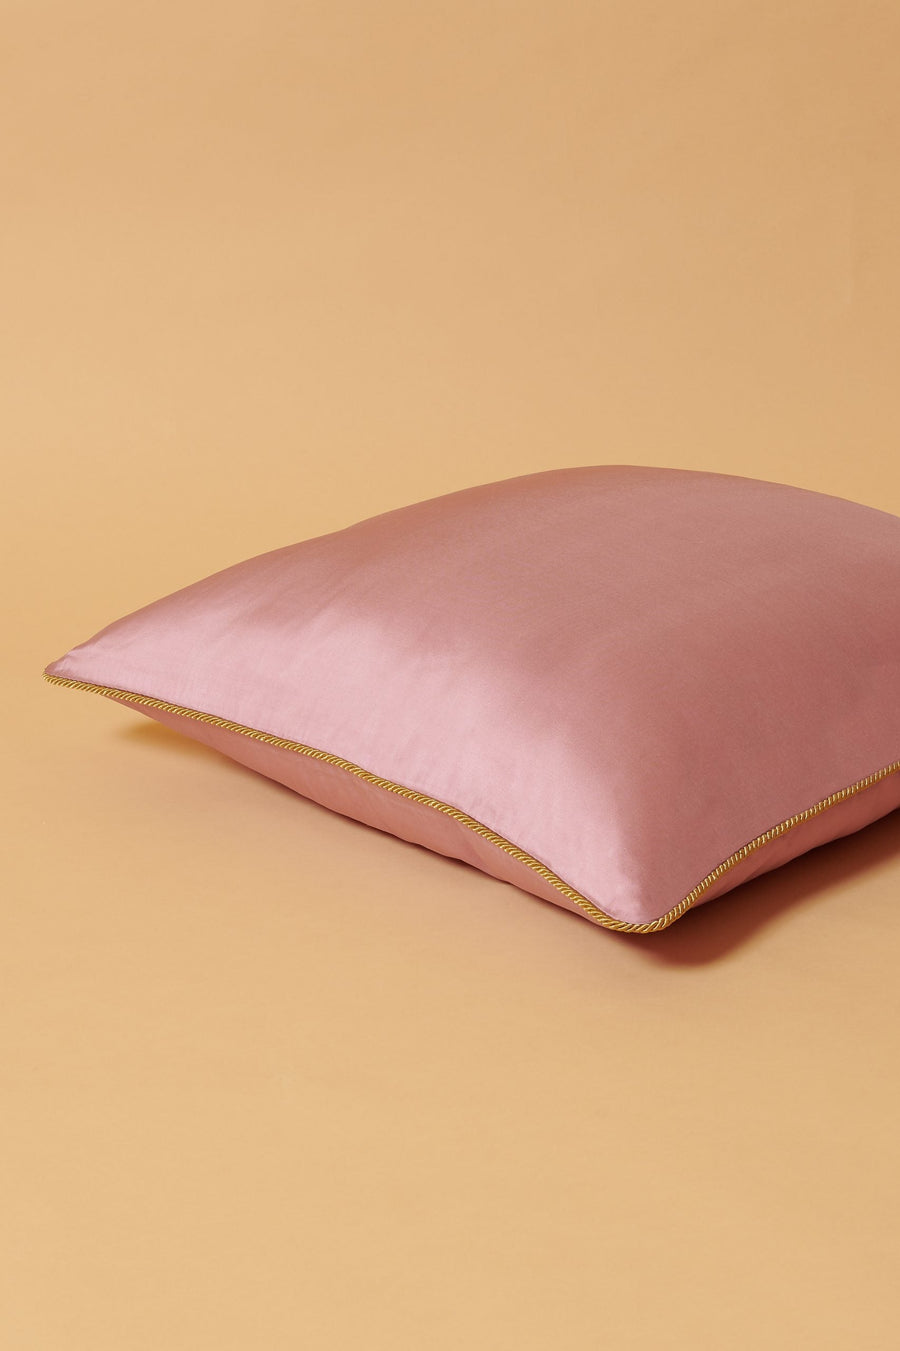 Cashmere Rose Pink Silk Cushion (60 x 60 cm)